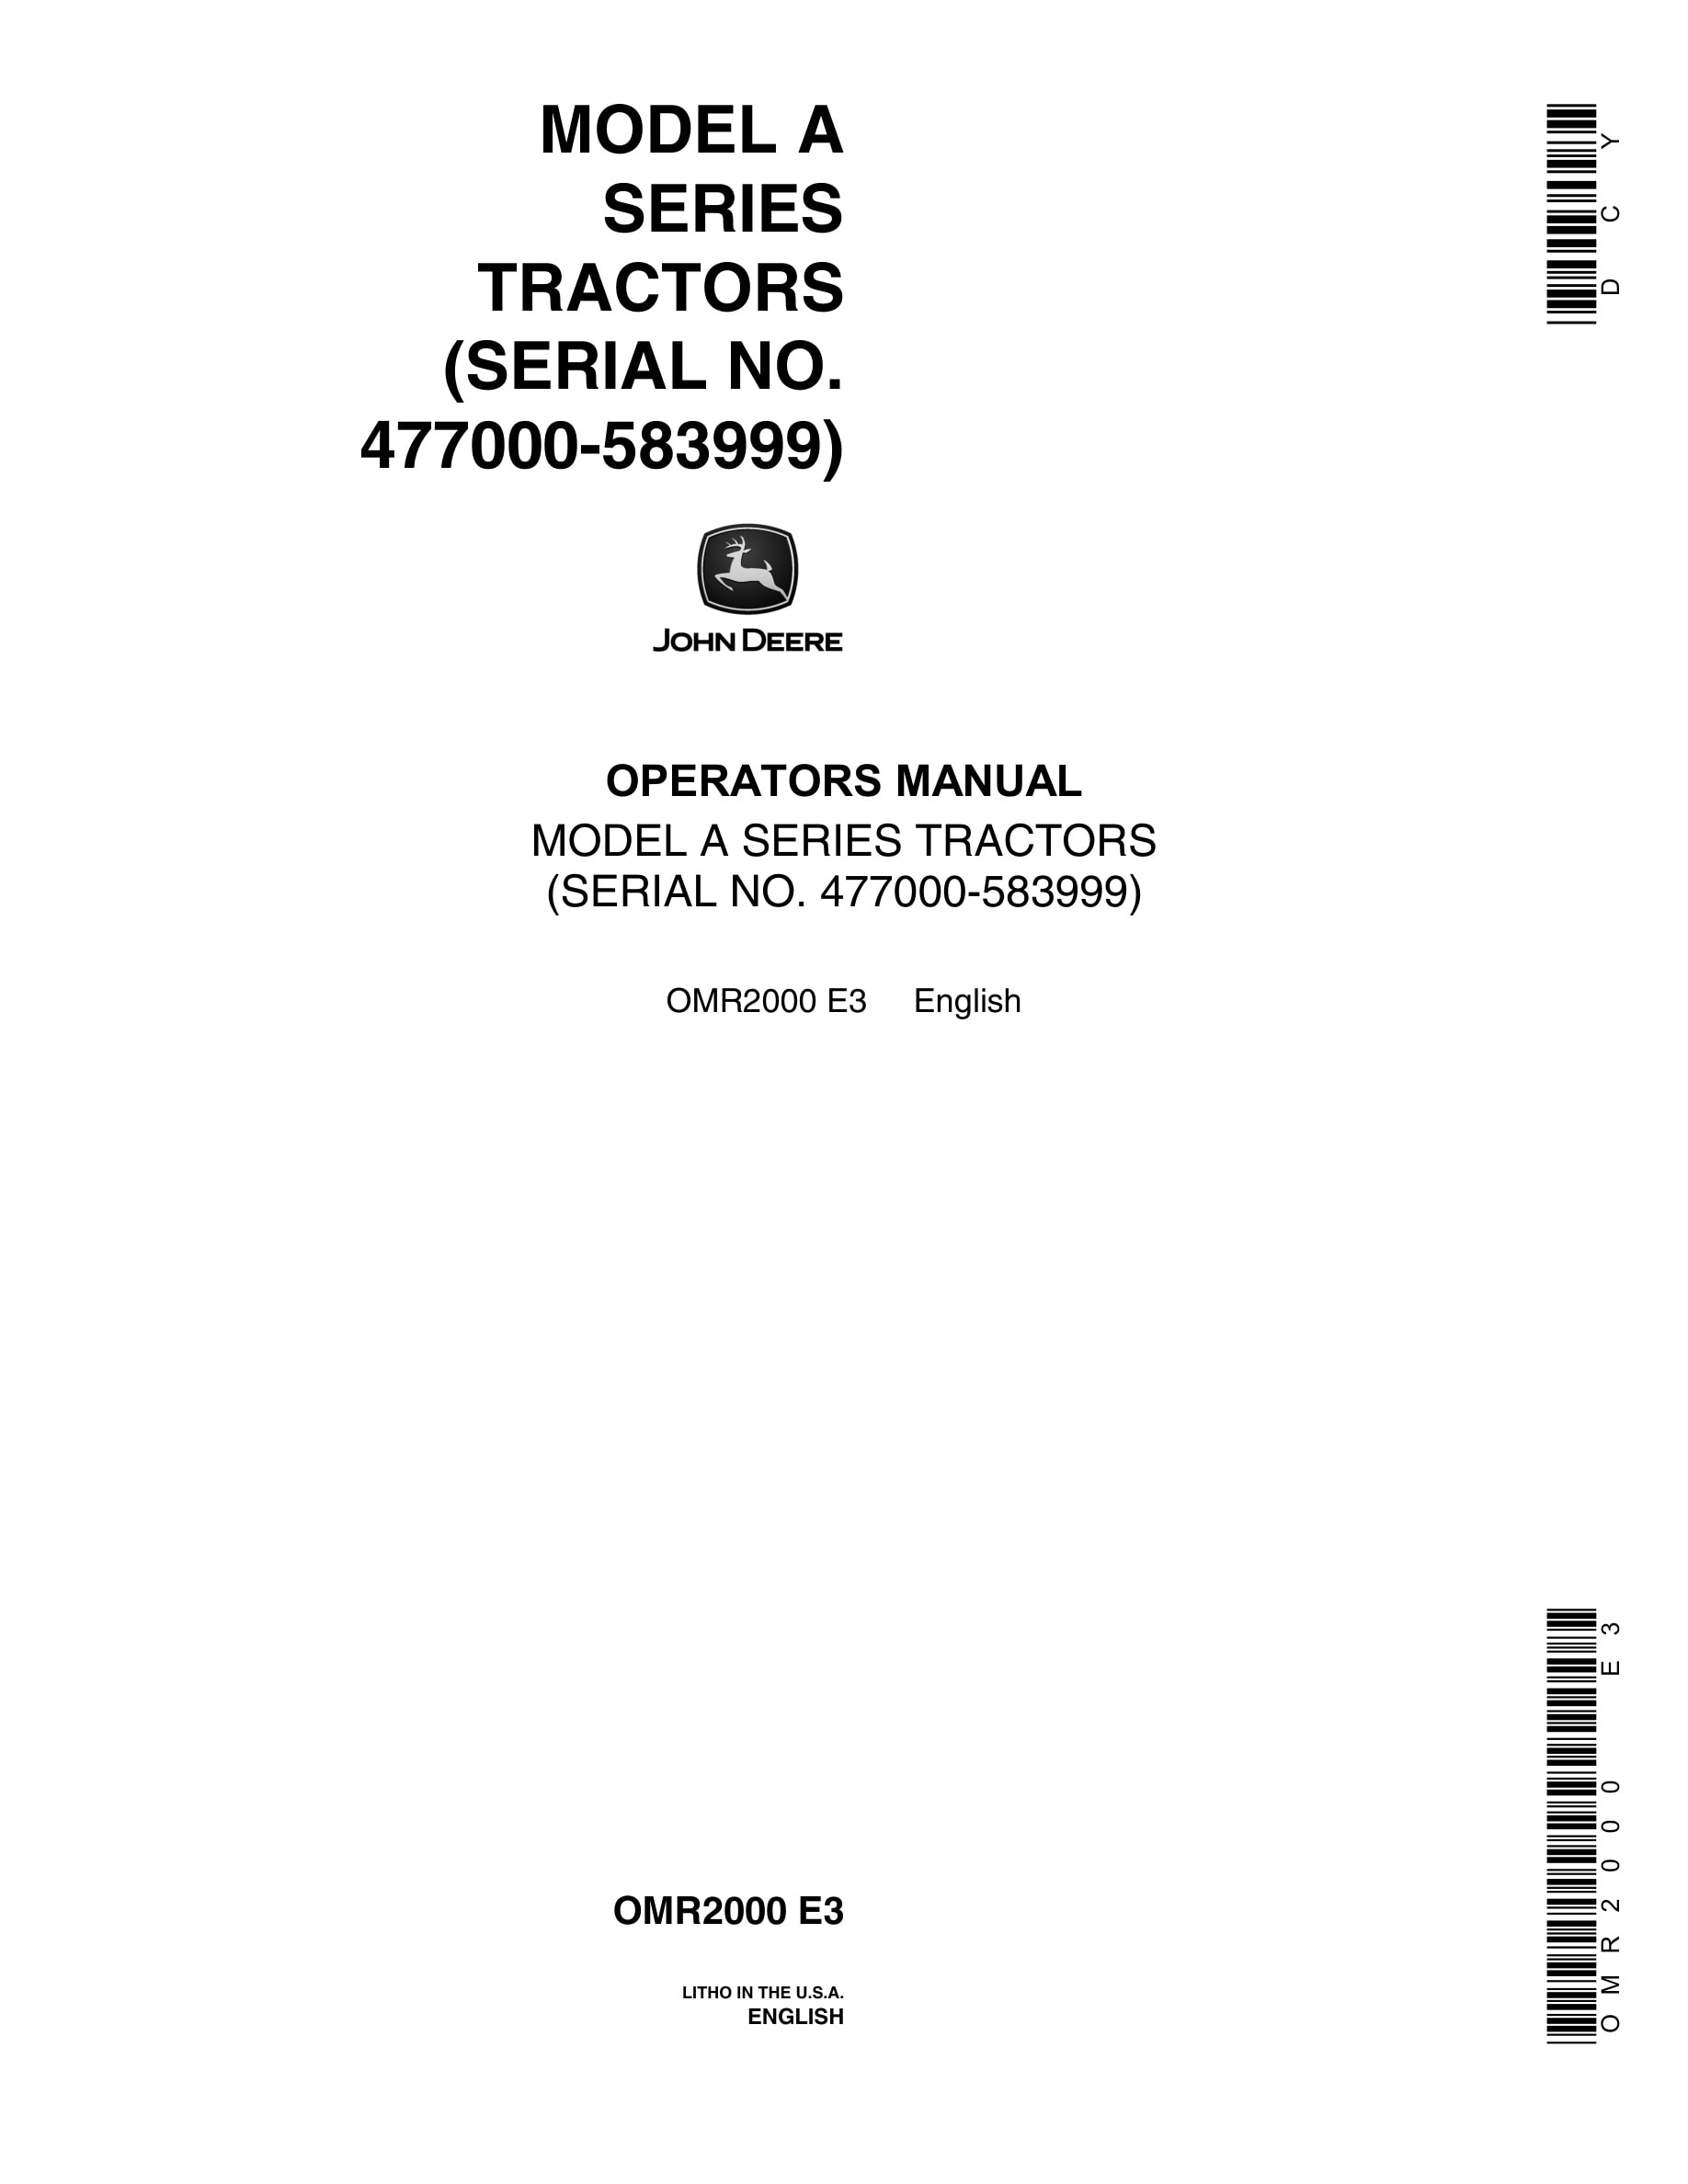 John Deere Model A Tractor Operator Manual OMR2000-1